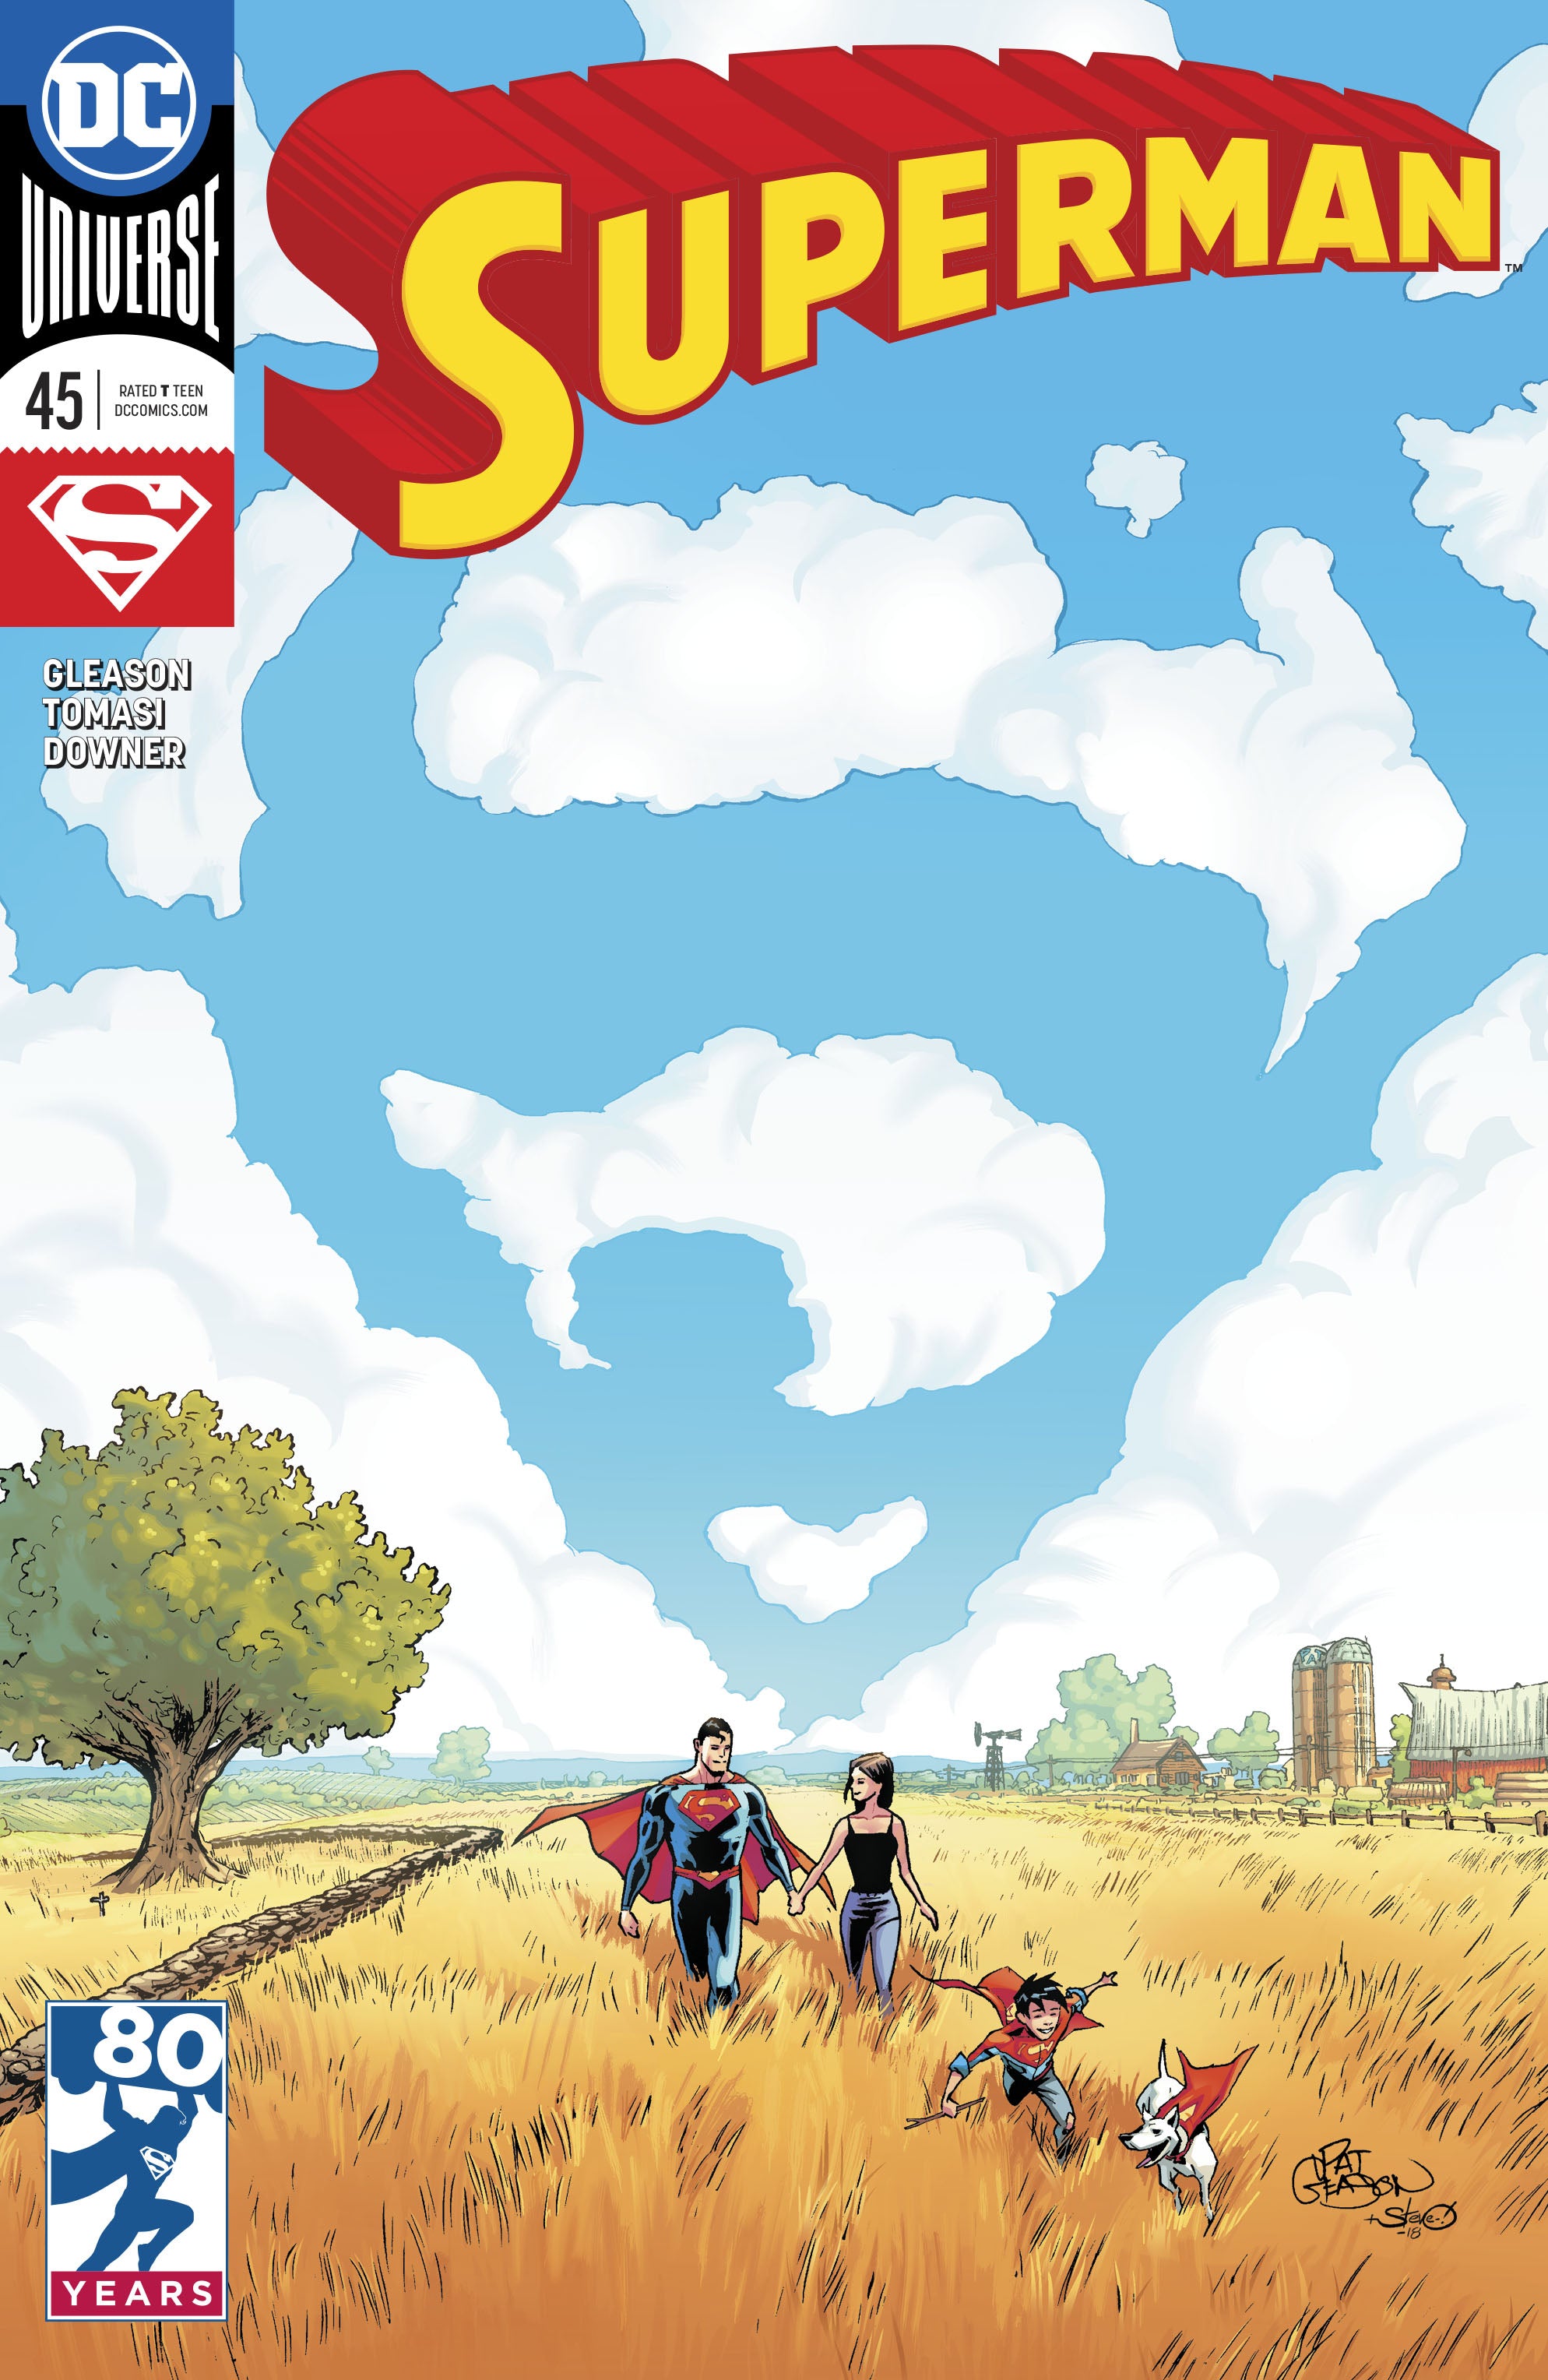 SUPERMAN Vol 4 #45 | Game Master's Emporium (The New GME)